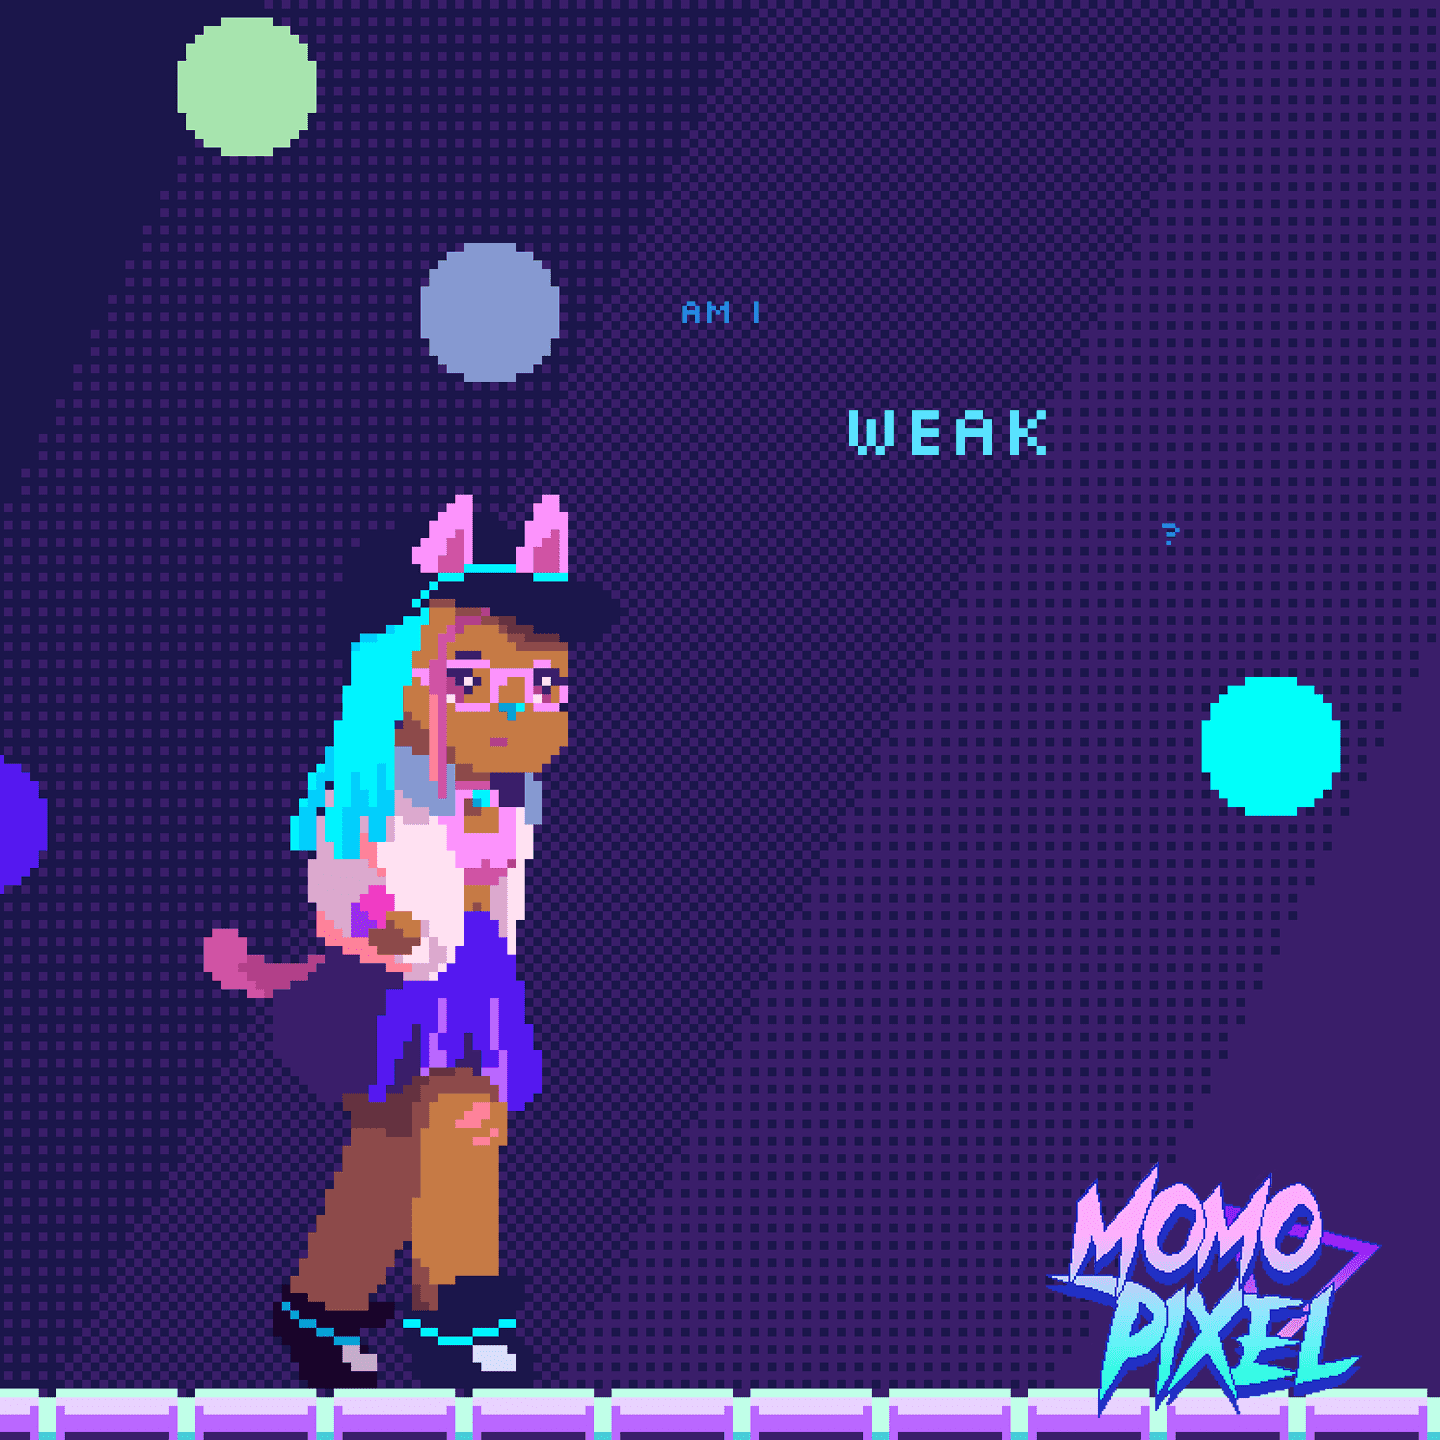 Cover art for Momo Pixel's song: Weak